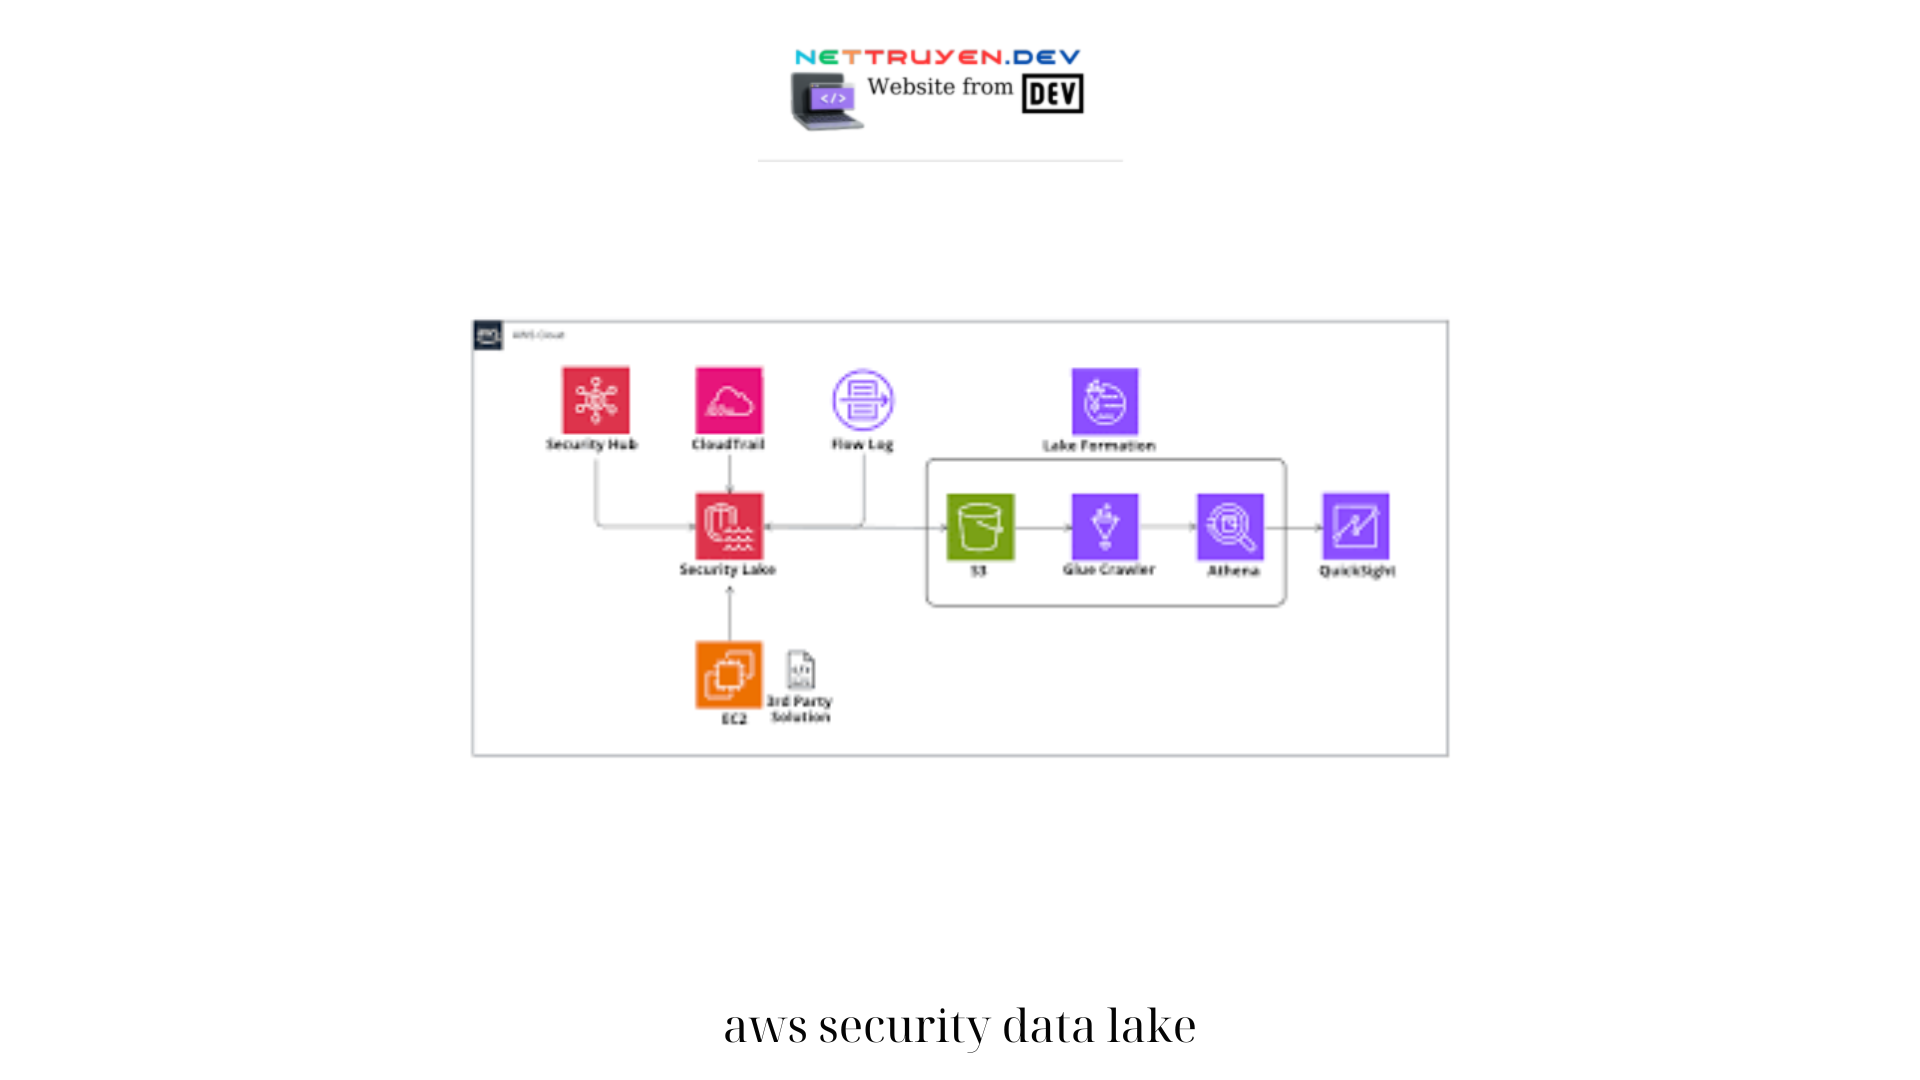 aws security data lake